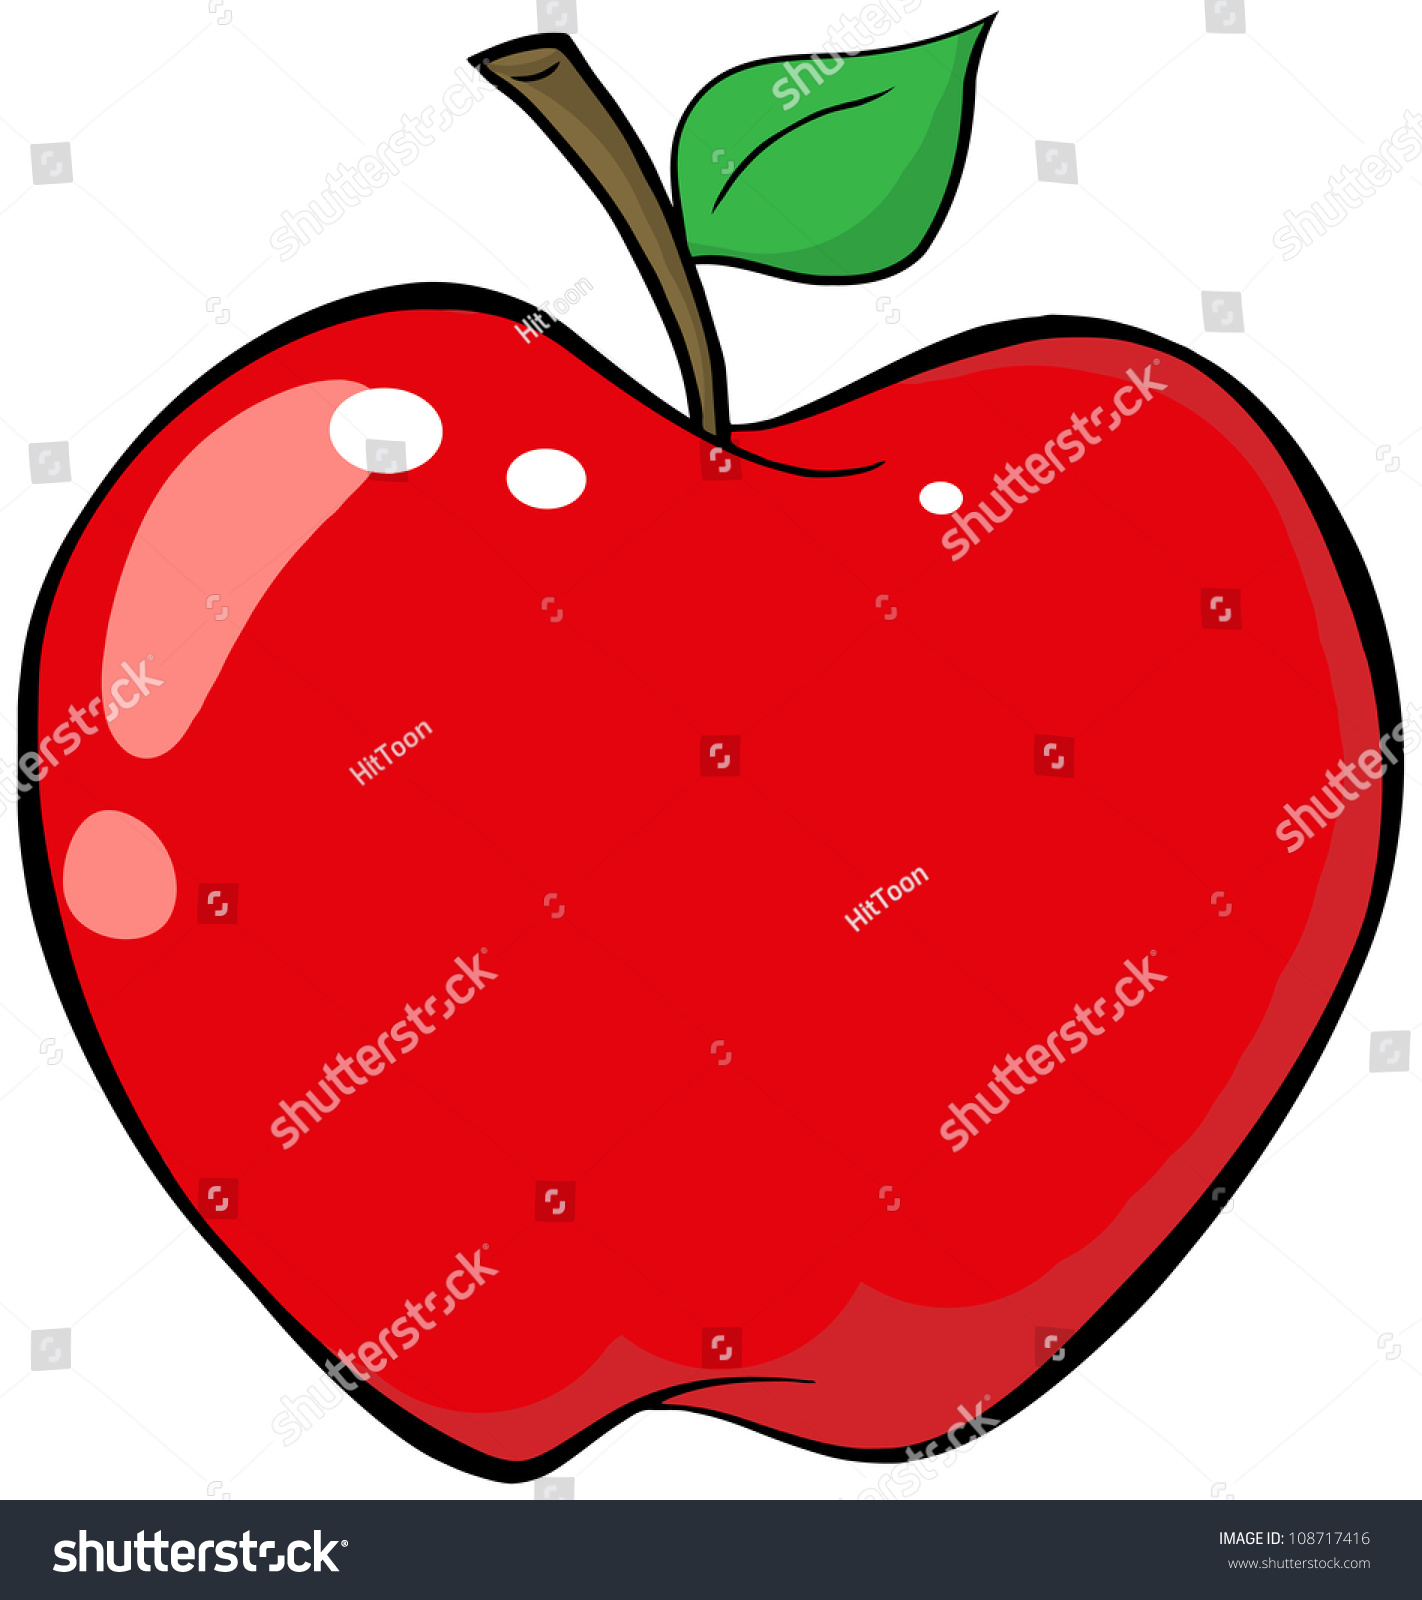 Red Apple .Vector Illustration - 108717416 : Shutterstock